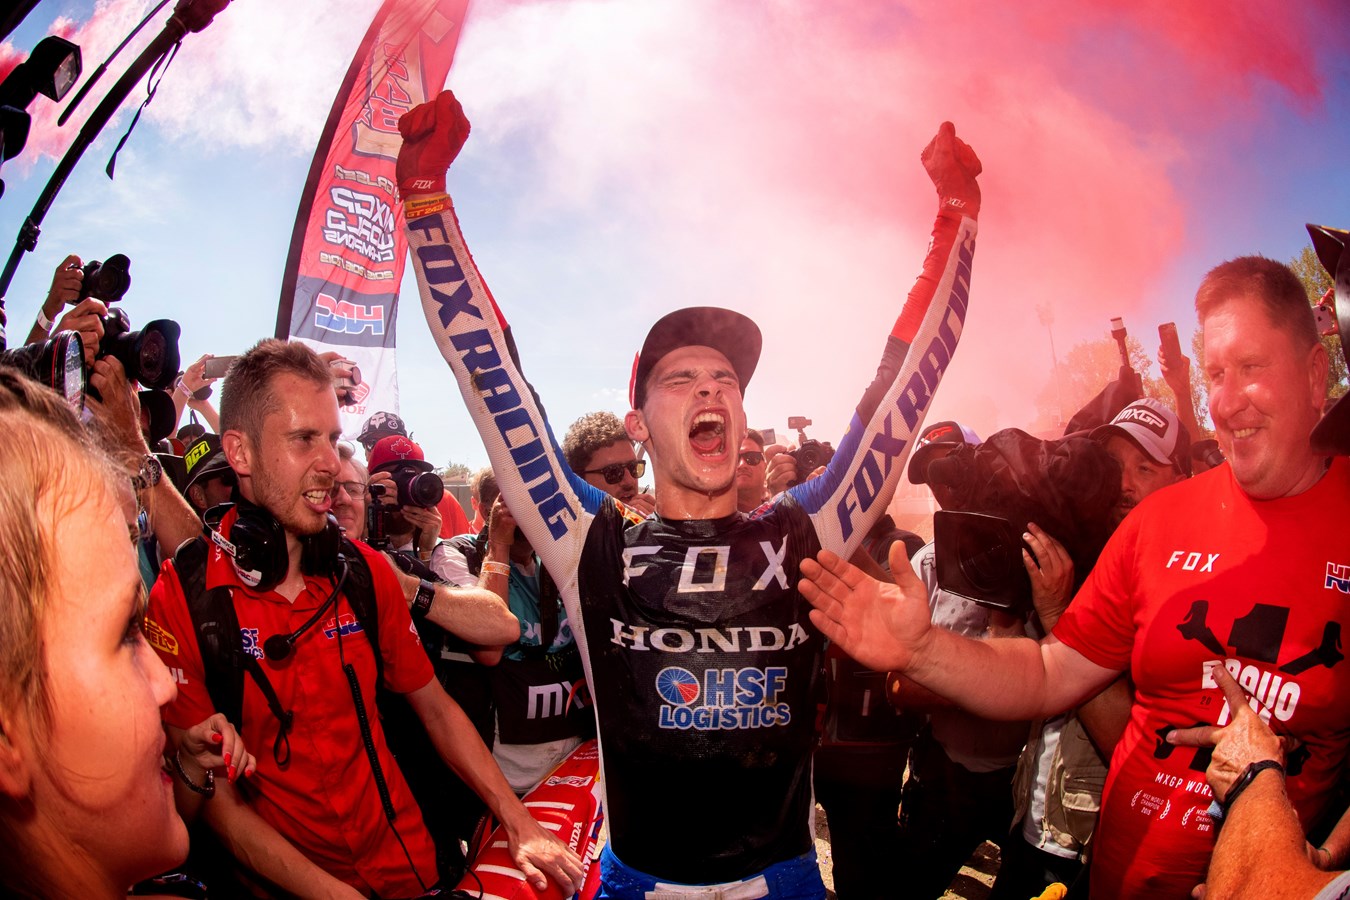 Gajser seals third world championship in front of massive Slovenian crowds